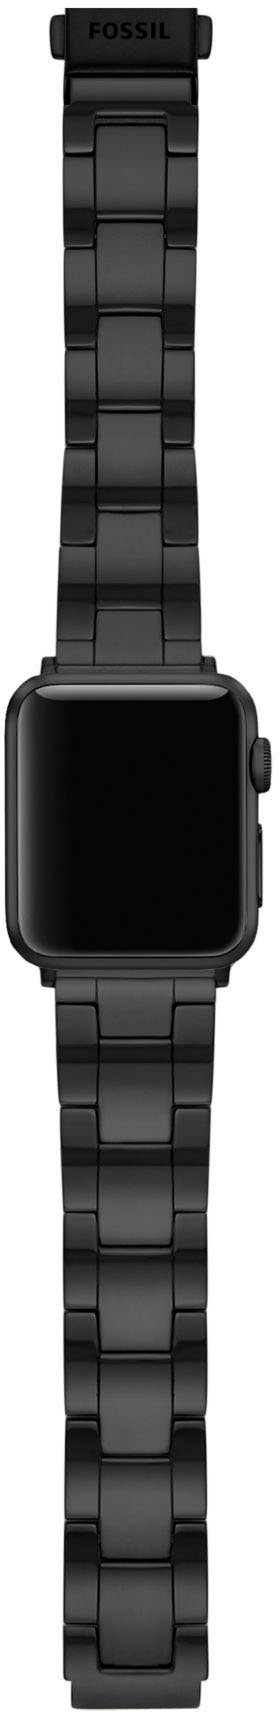 Strap, Geschenk ideal Apple Smartwatch-Armband als auch S380013, Fossil